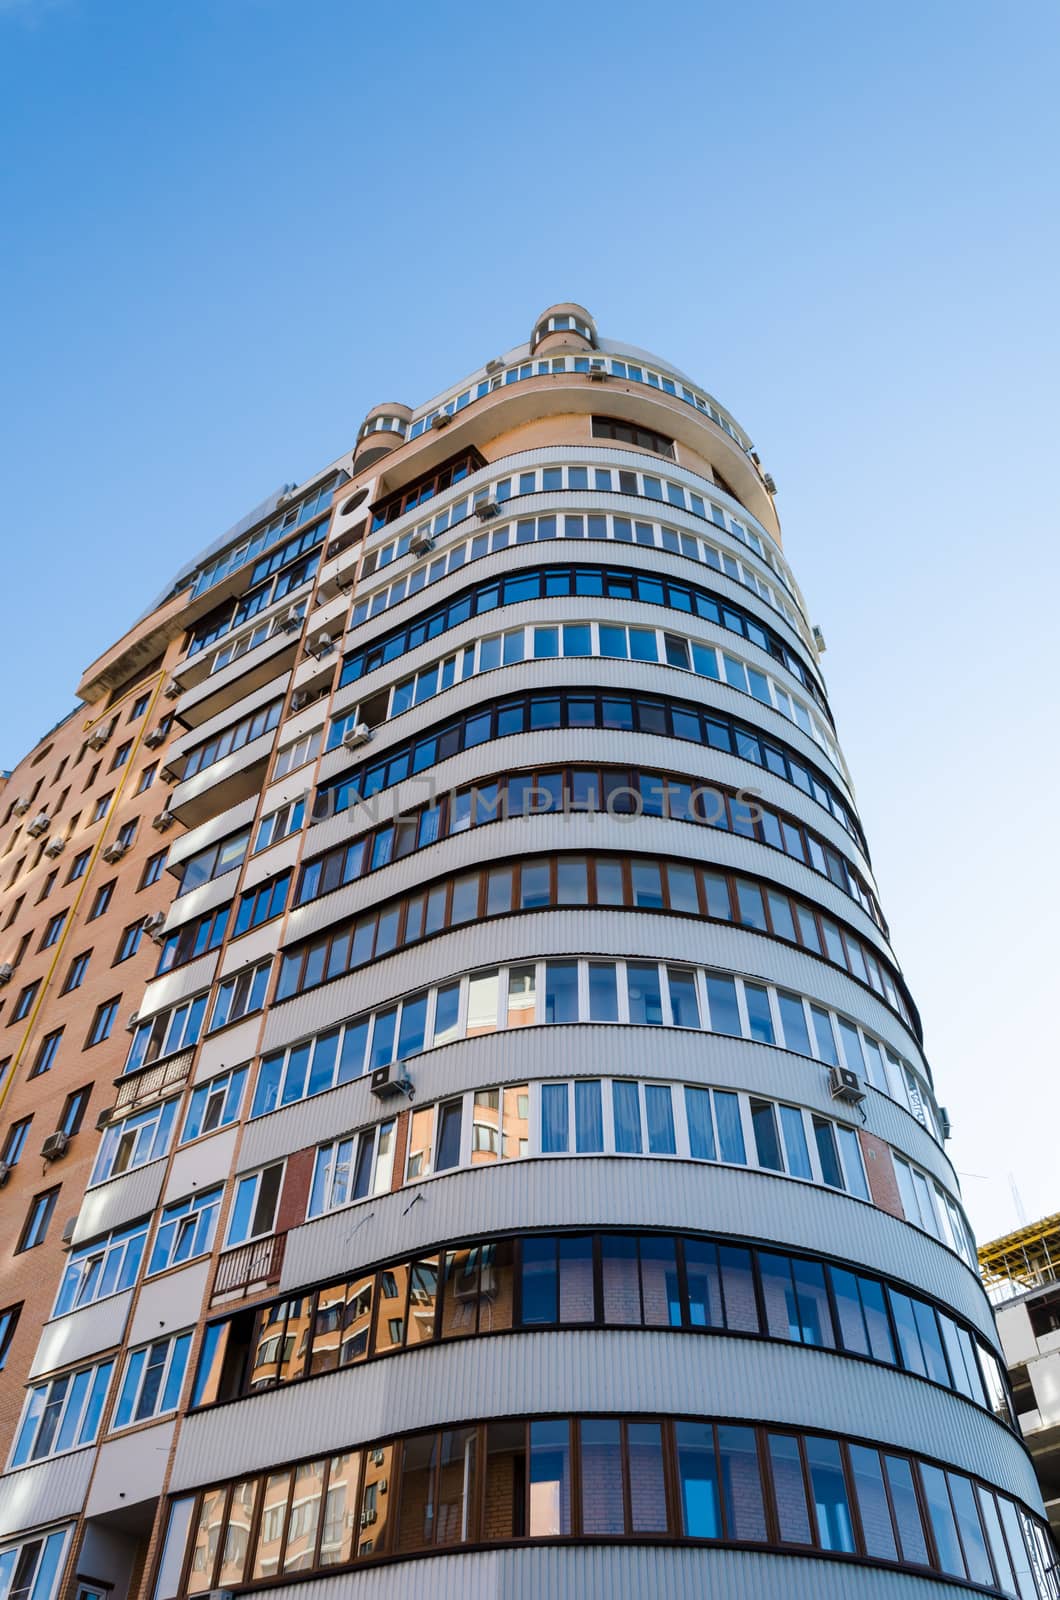 real estate high-rise semi-circular residential building against a blue sky